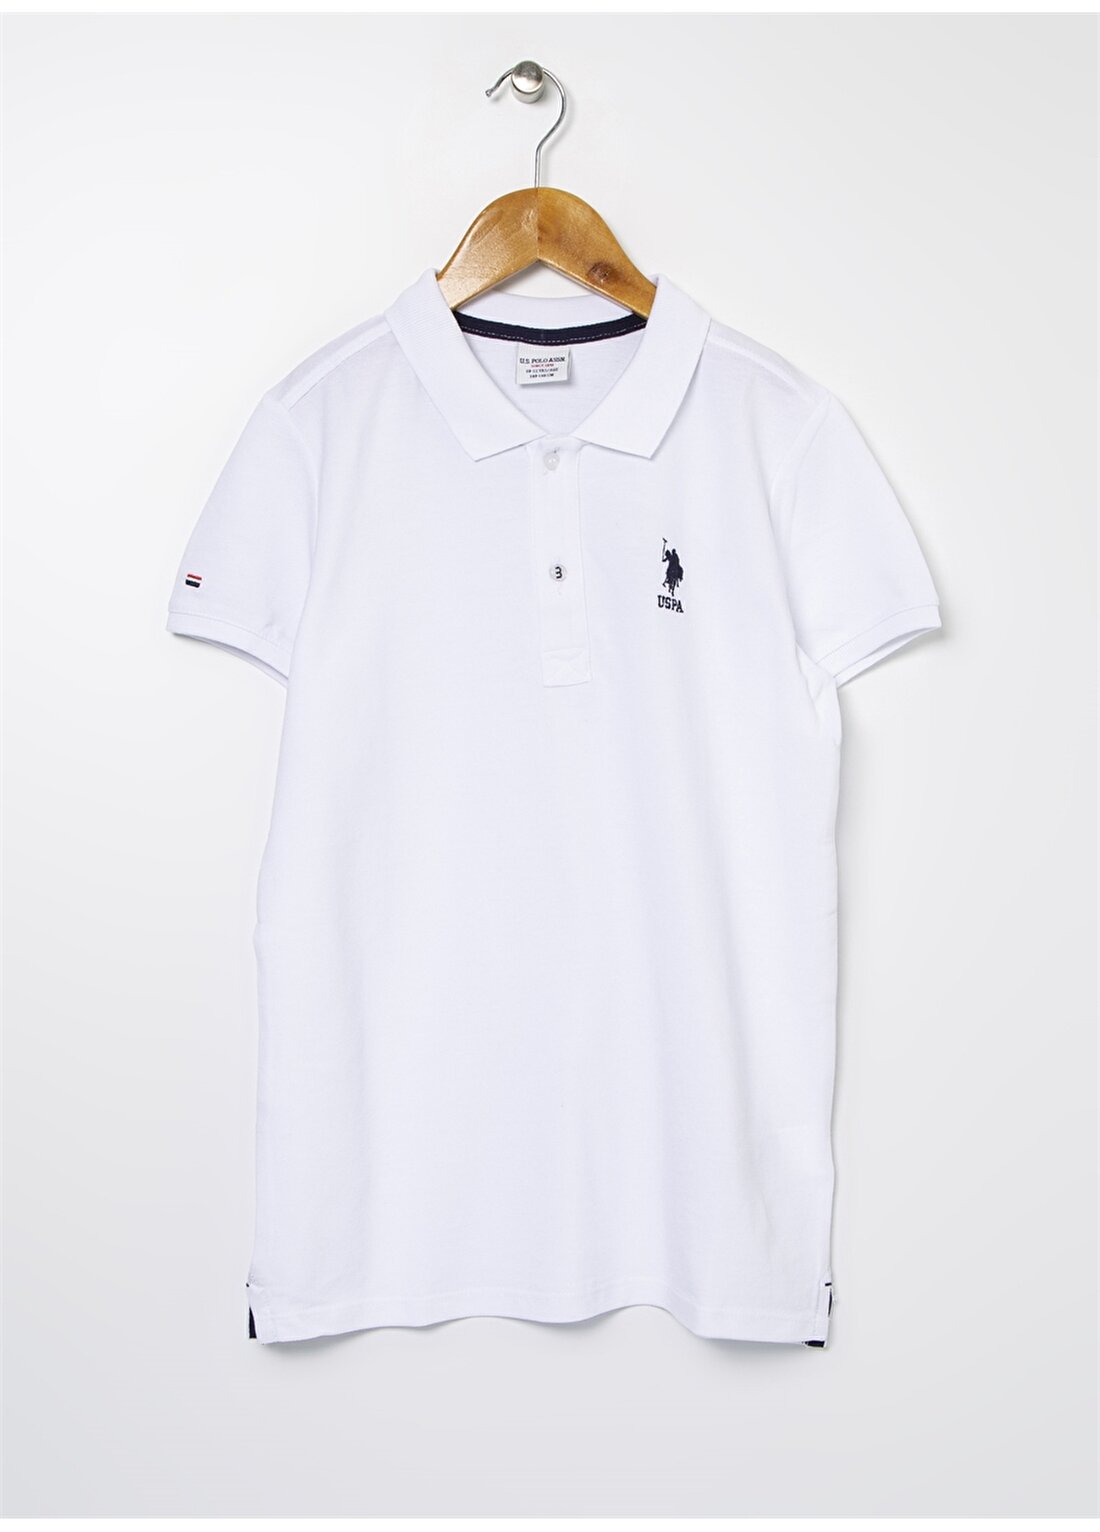 U.S. Polo Assn. Düz Beyaz Erkek Çocuk T-Shirt 949152